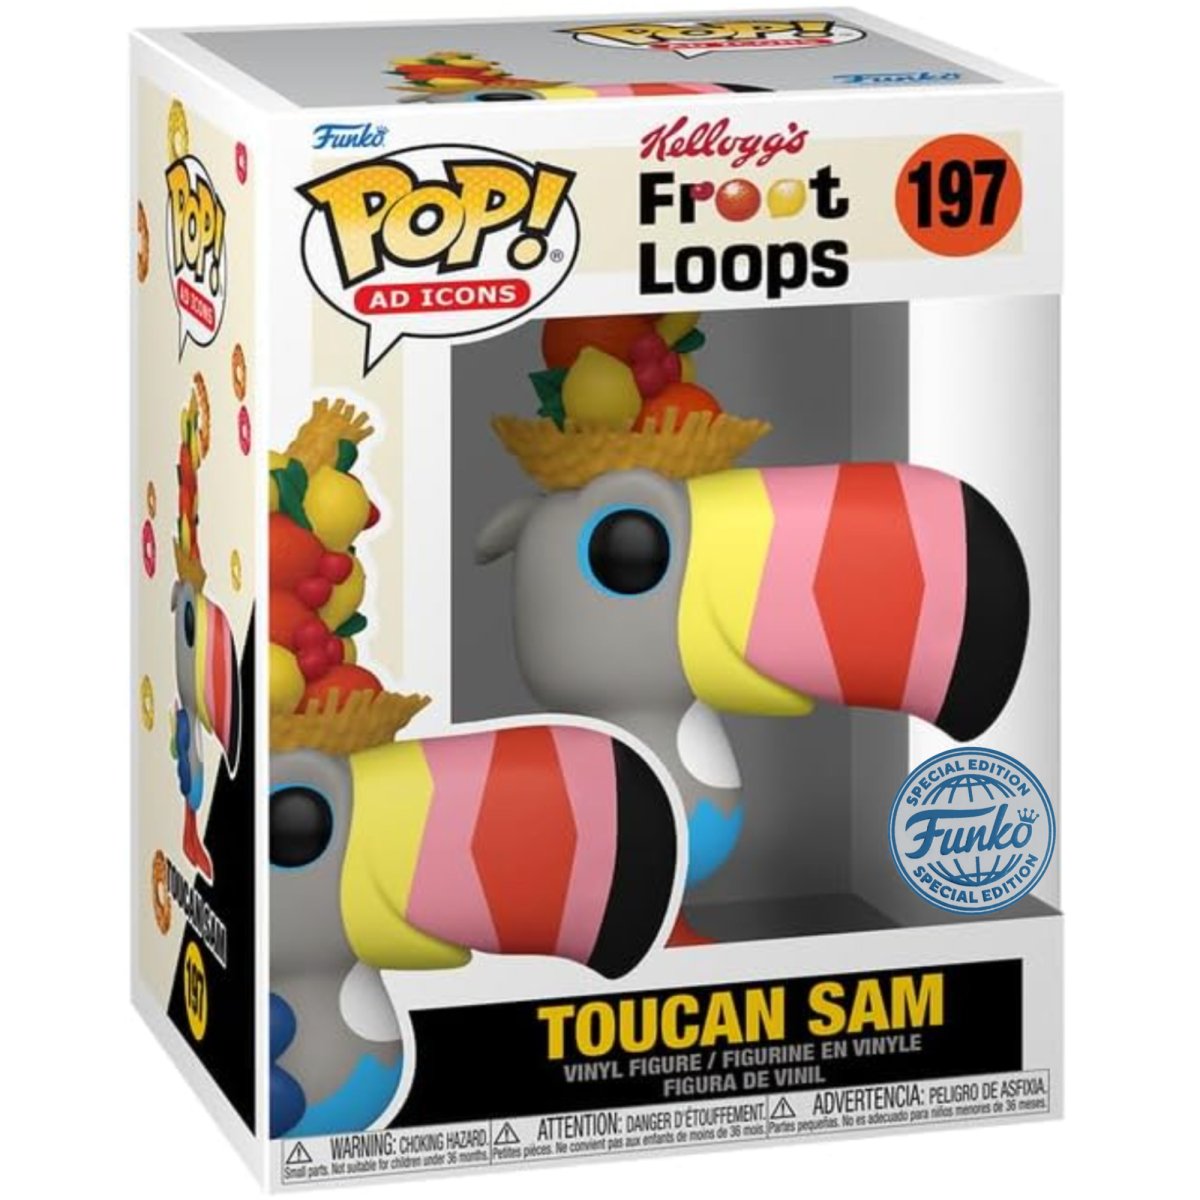 Kellogg's Fruit Loops - Toucan Sam (Special Edition) #197 - Funko Pop! Vinyl Icons - Persona Toys